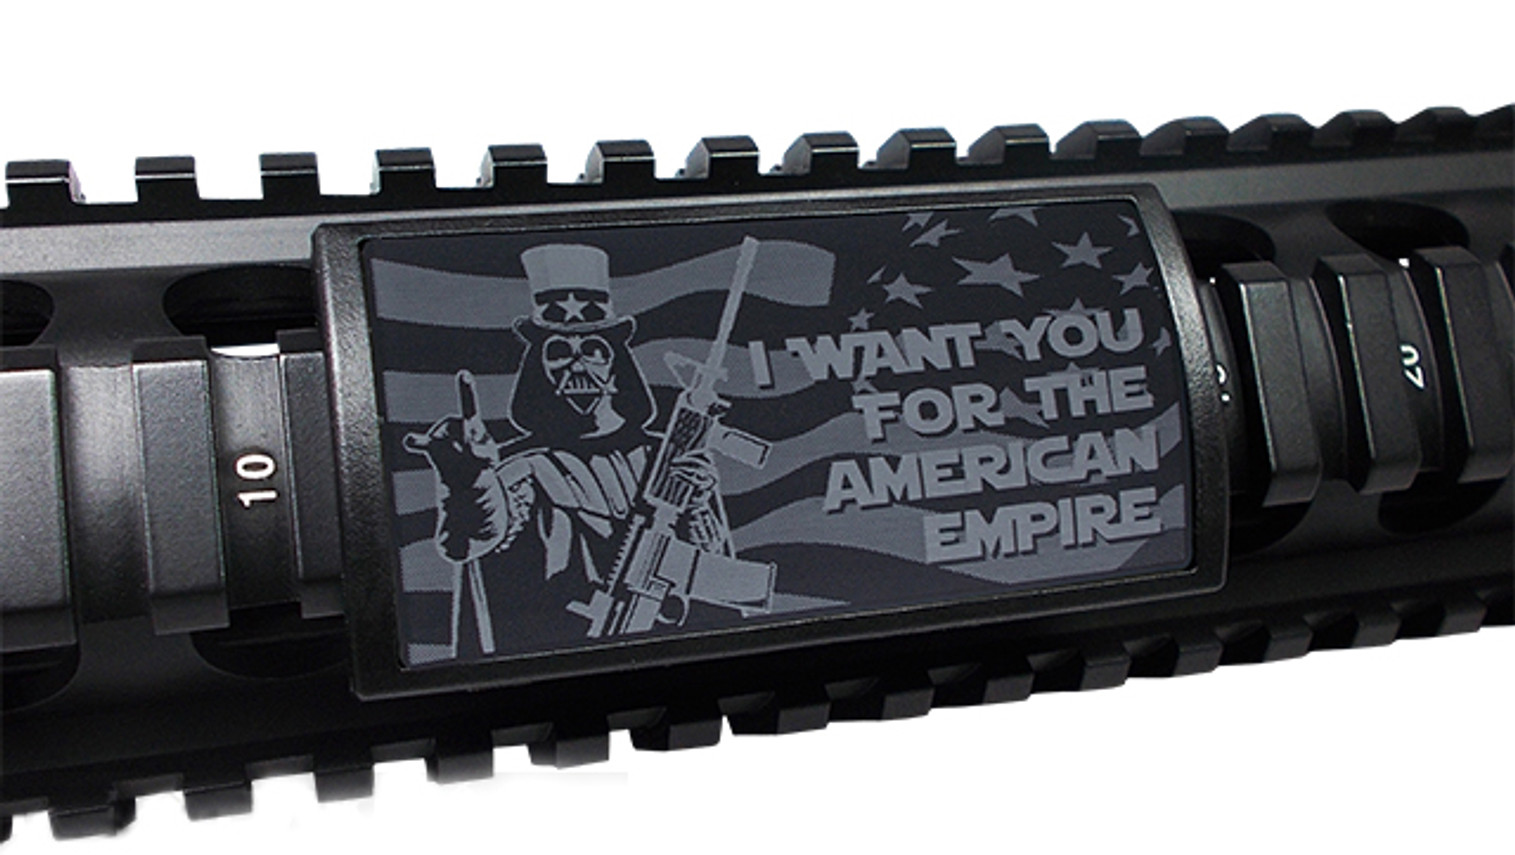 Custom Gun Rails (CGR) Large Laser Engraved Aluminum Rail Cover - Uncle Darth, I Want You